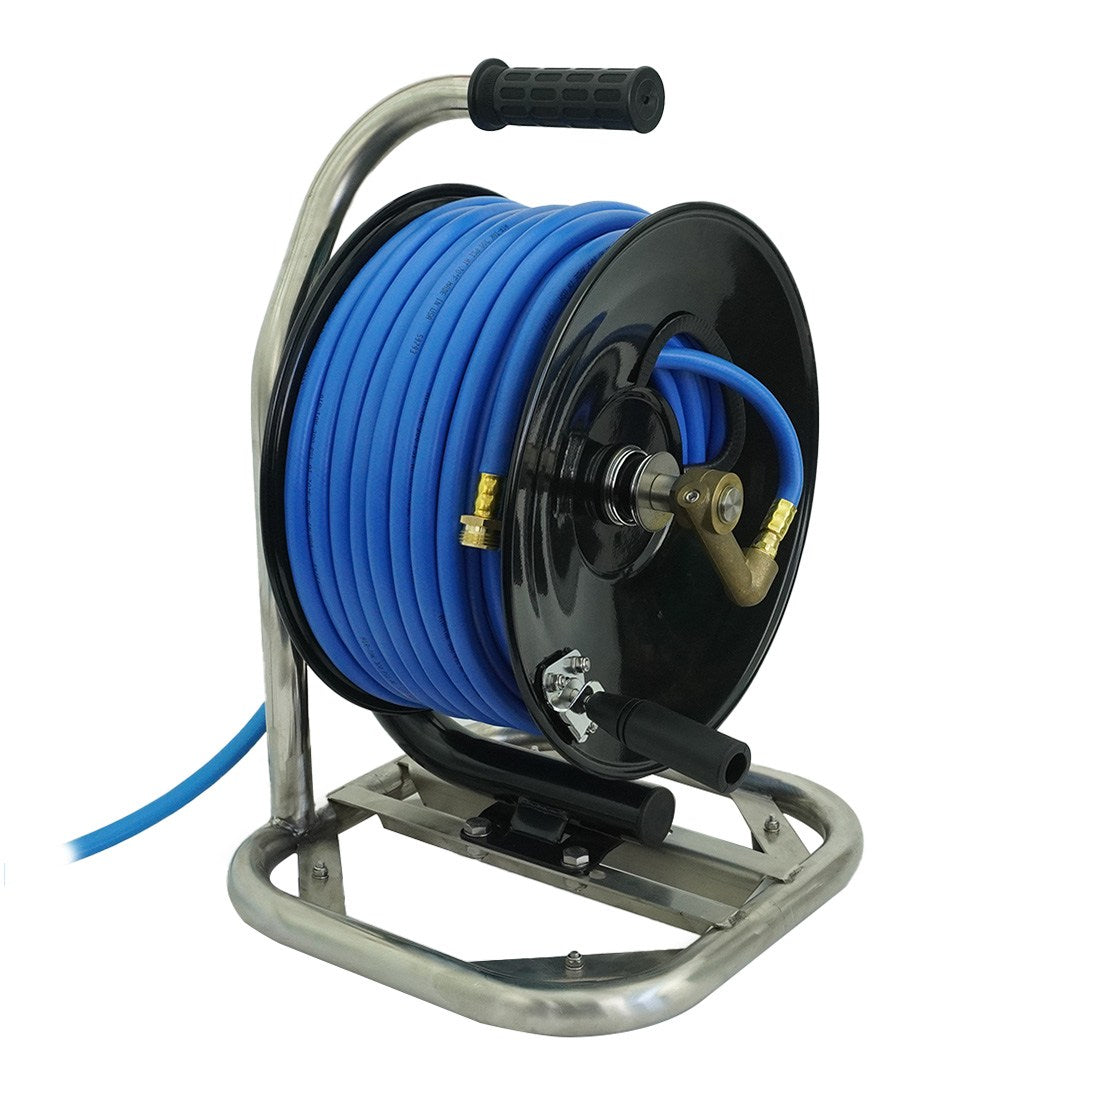 Titan hose reel issue - Supplies & Equipment - Pressure Washing